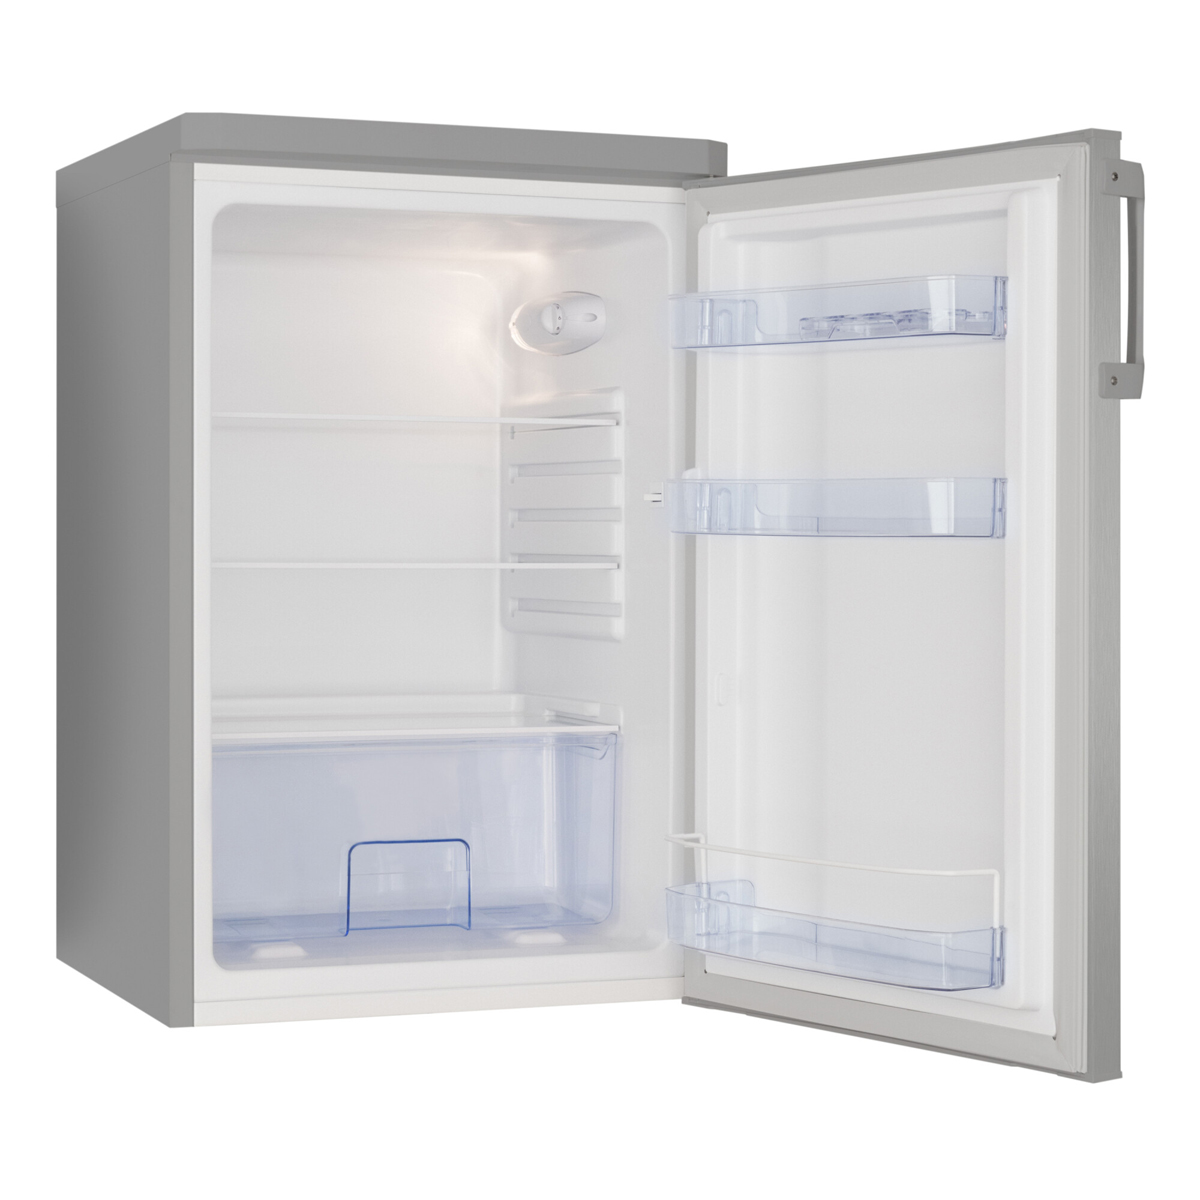 Edelstahloptik Silber AMICA 120 Vollraumkühlschrank Kühlschrank (E, Silber) Kühlschrank hoch, L 84,5 cm freistehend